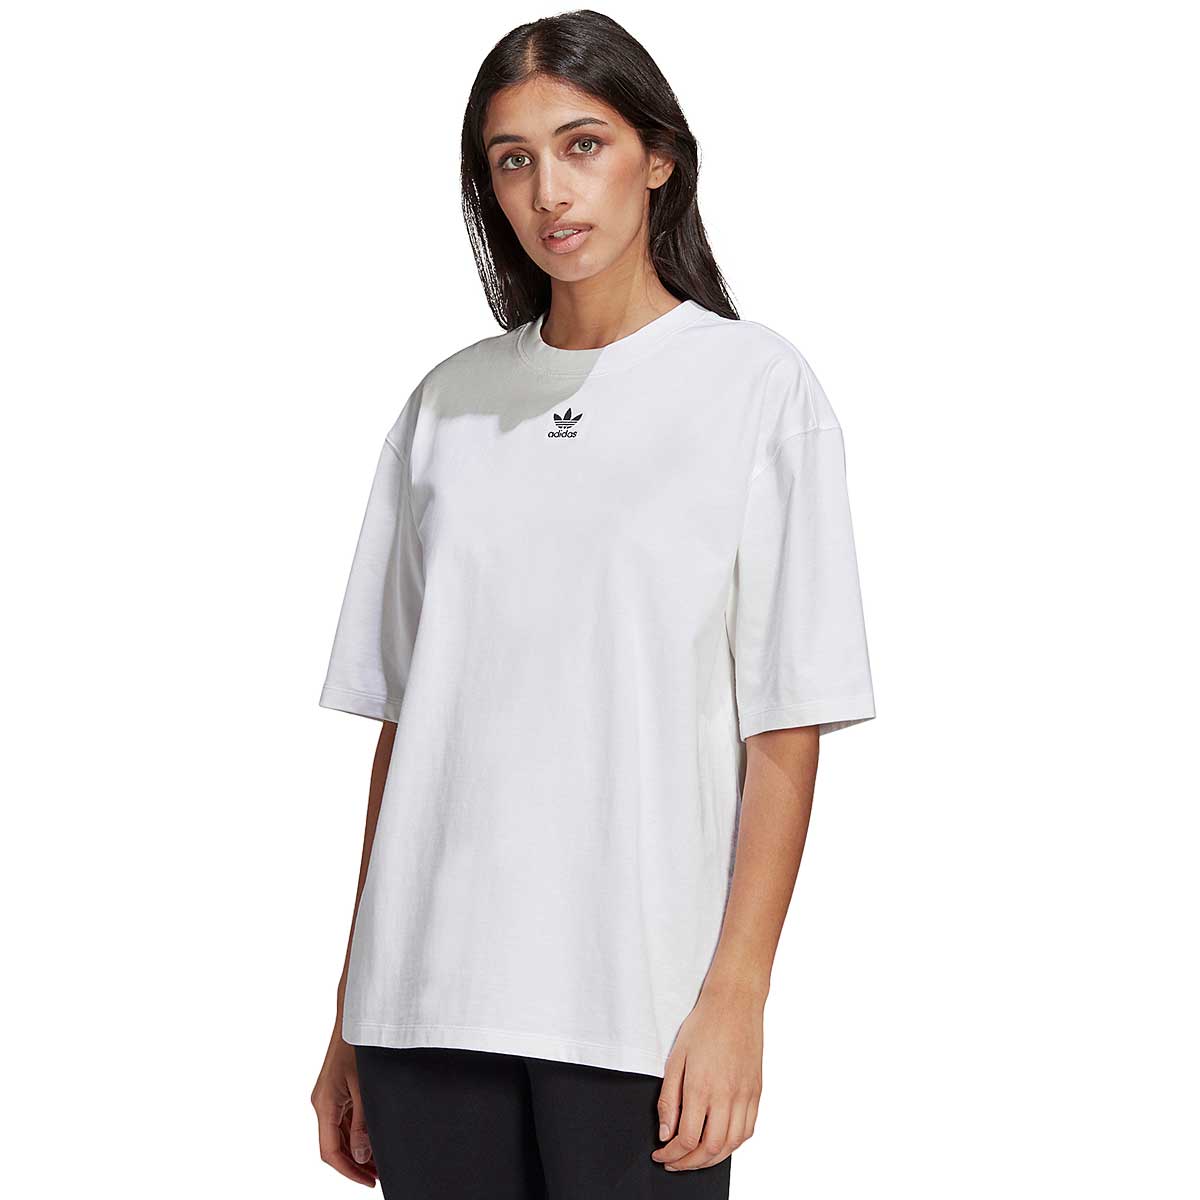 Adidas Originals Essential T-Shirt Women, White